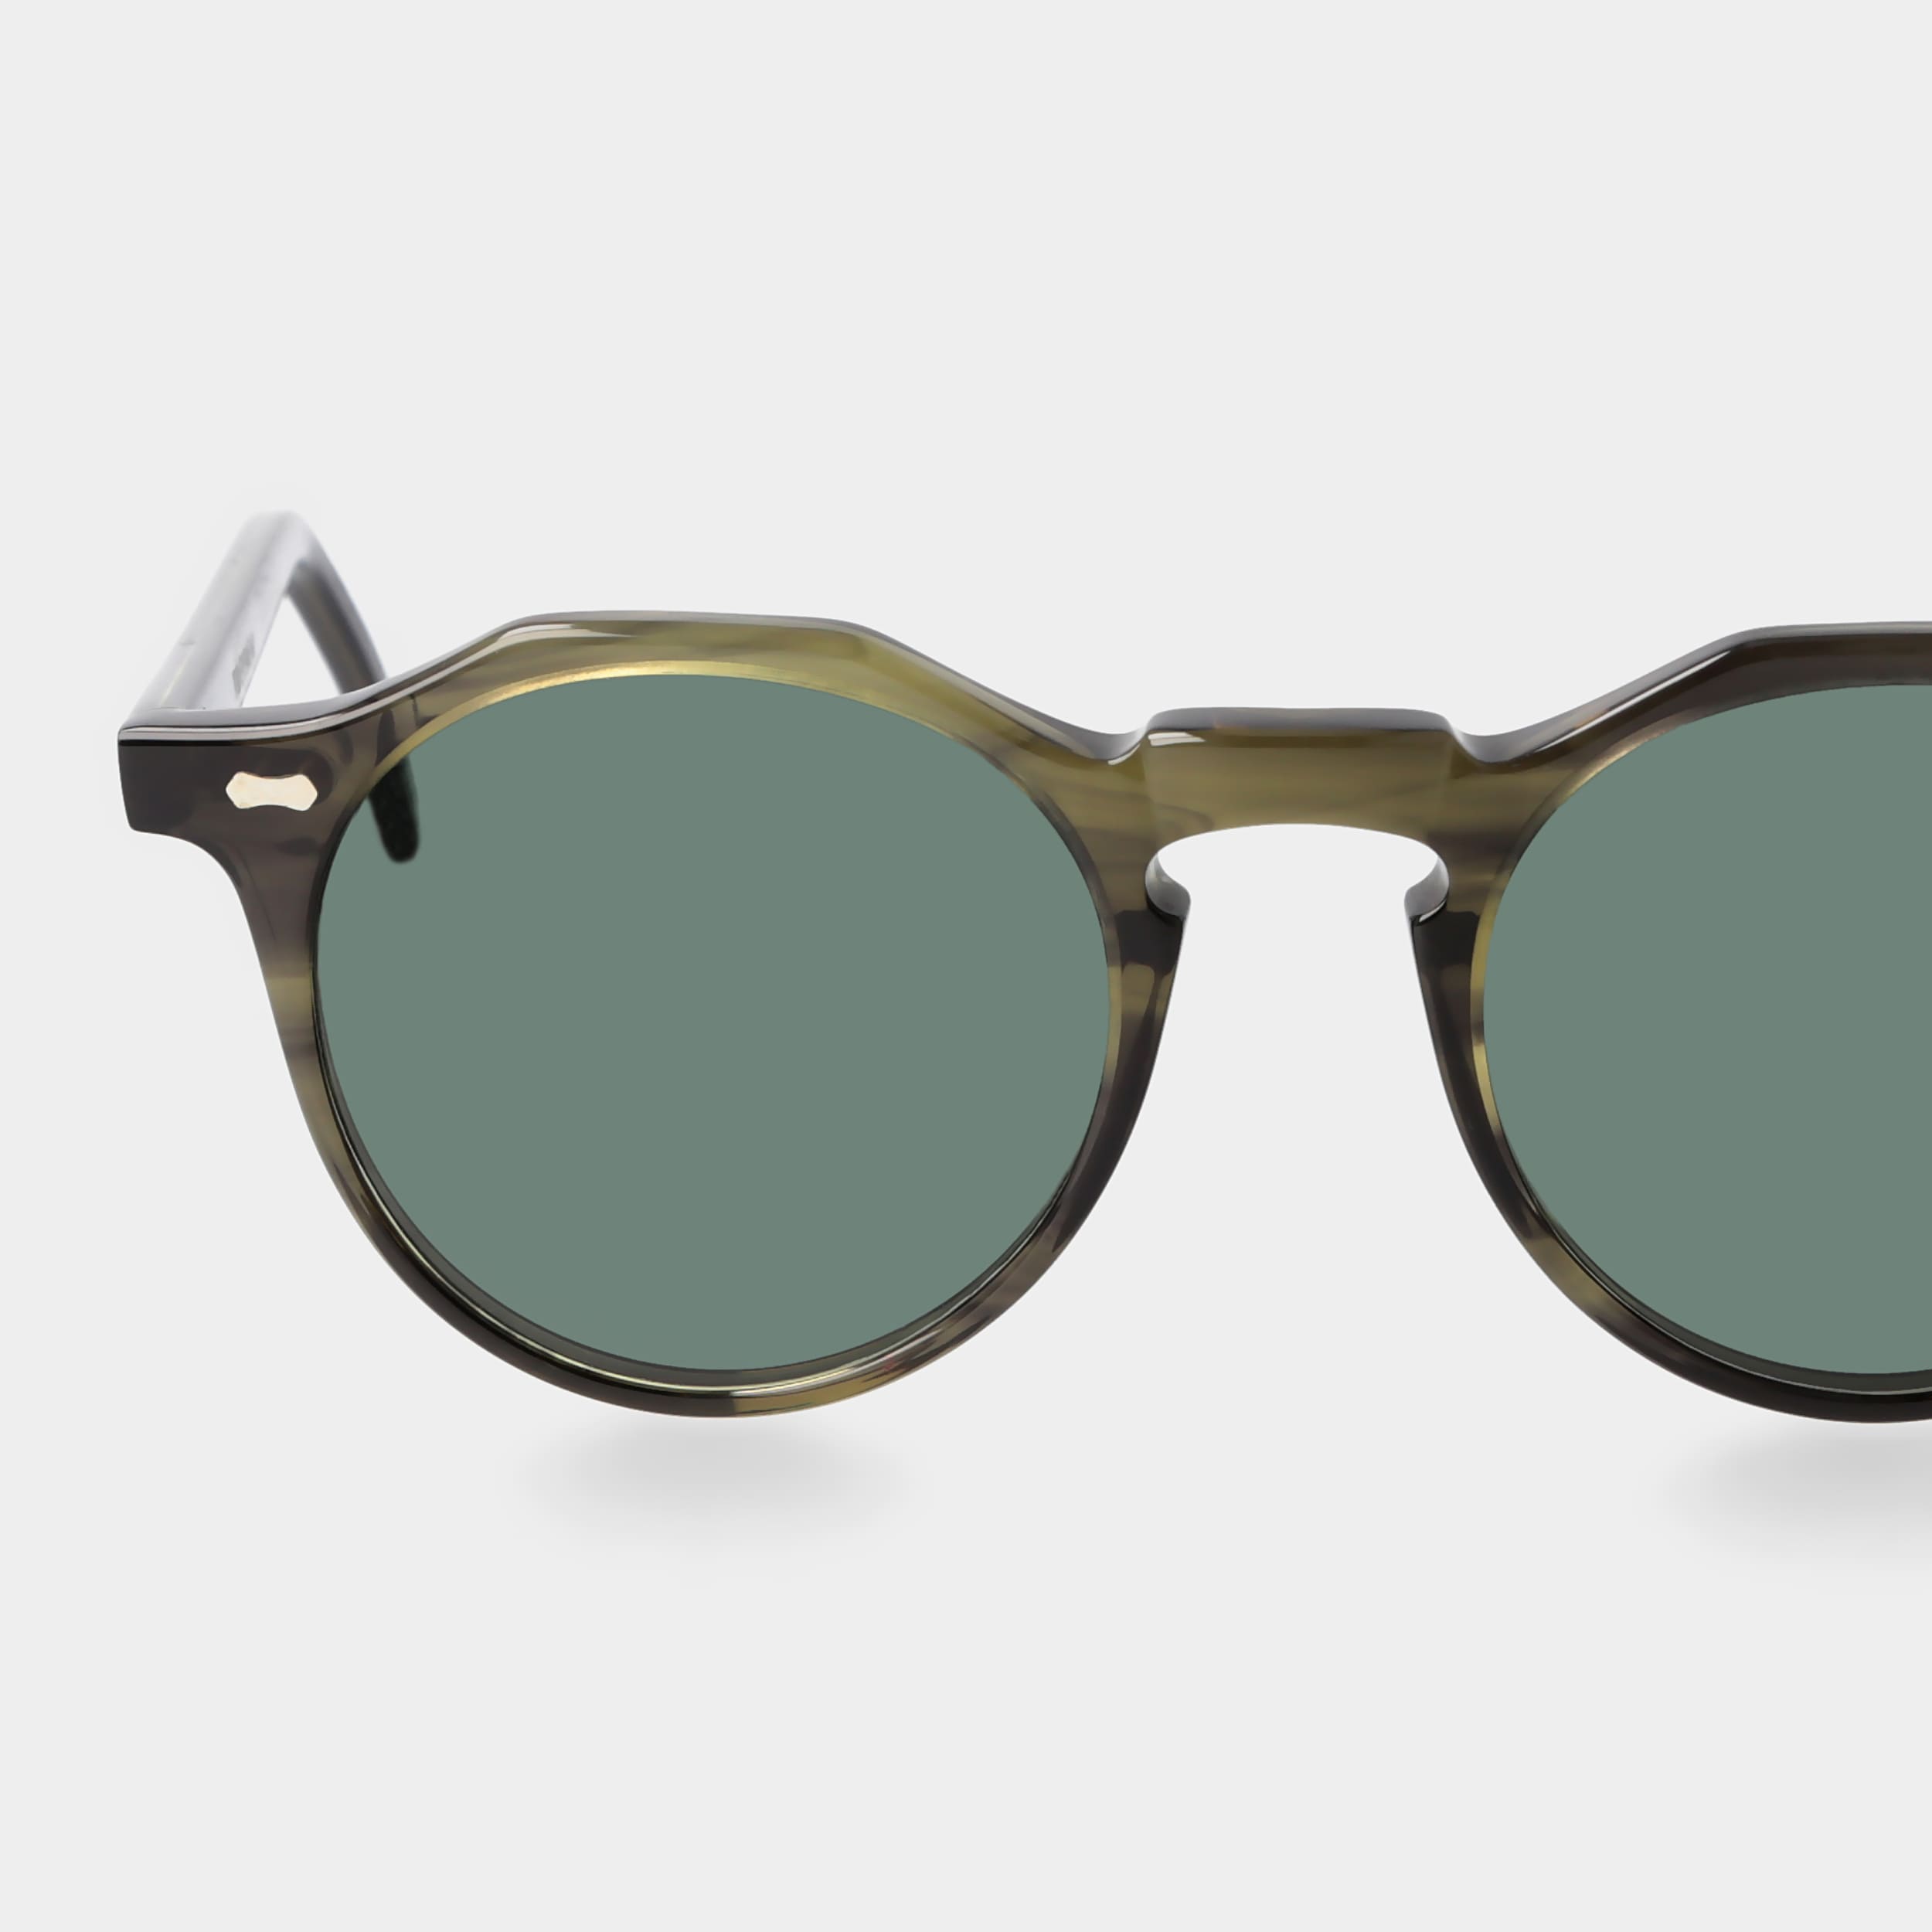 sunglasses-lapel-eco-green-bottle-green-sustainable-tbd-eyewear-lens